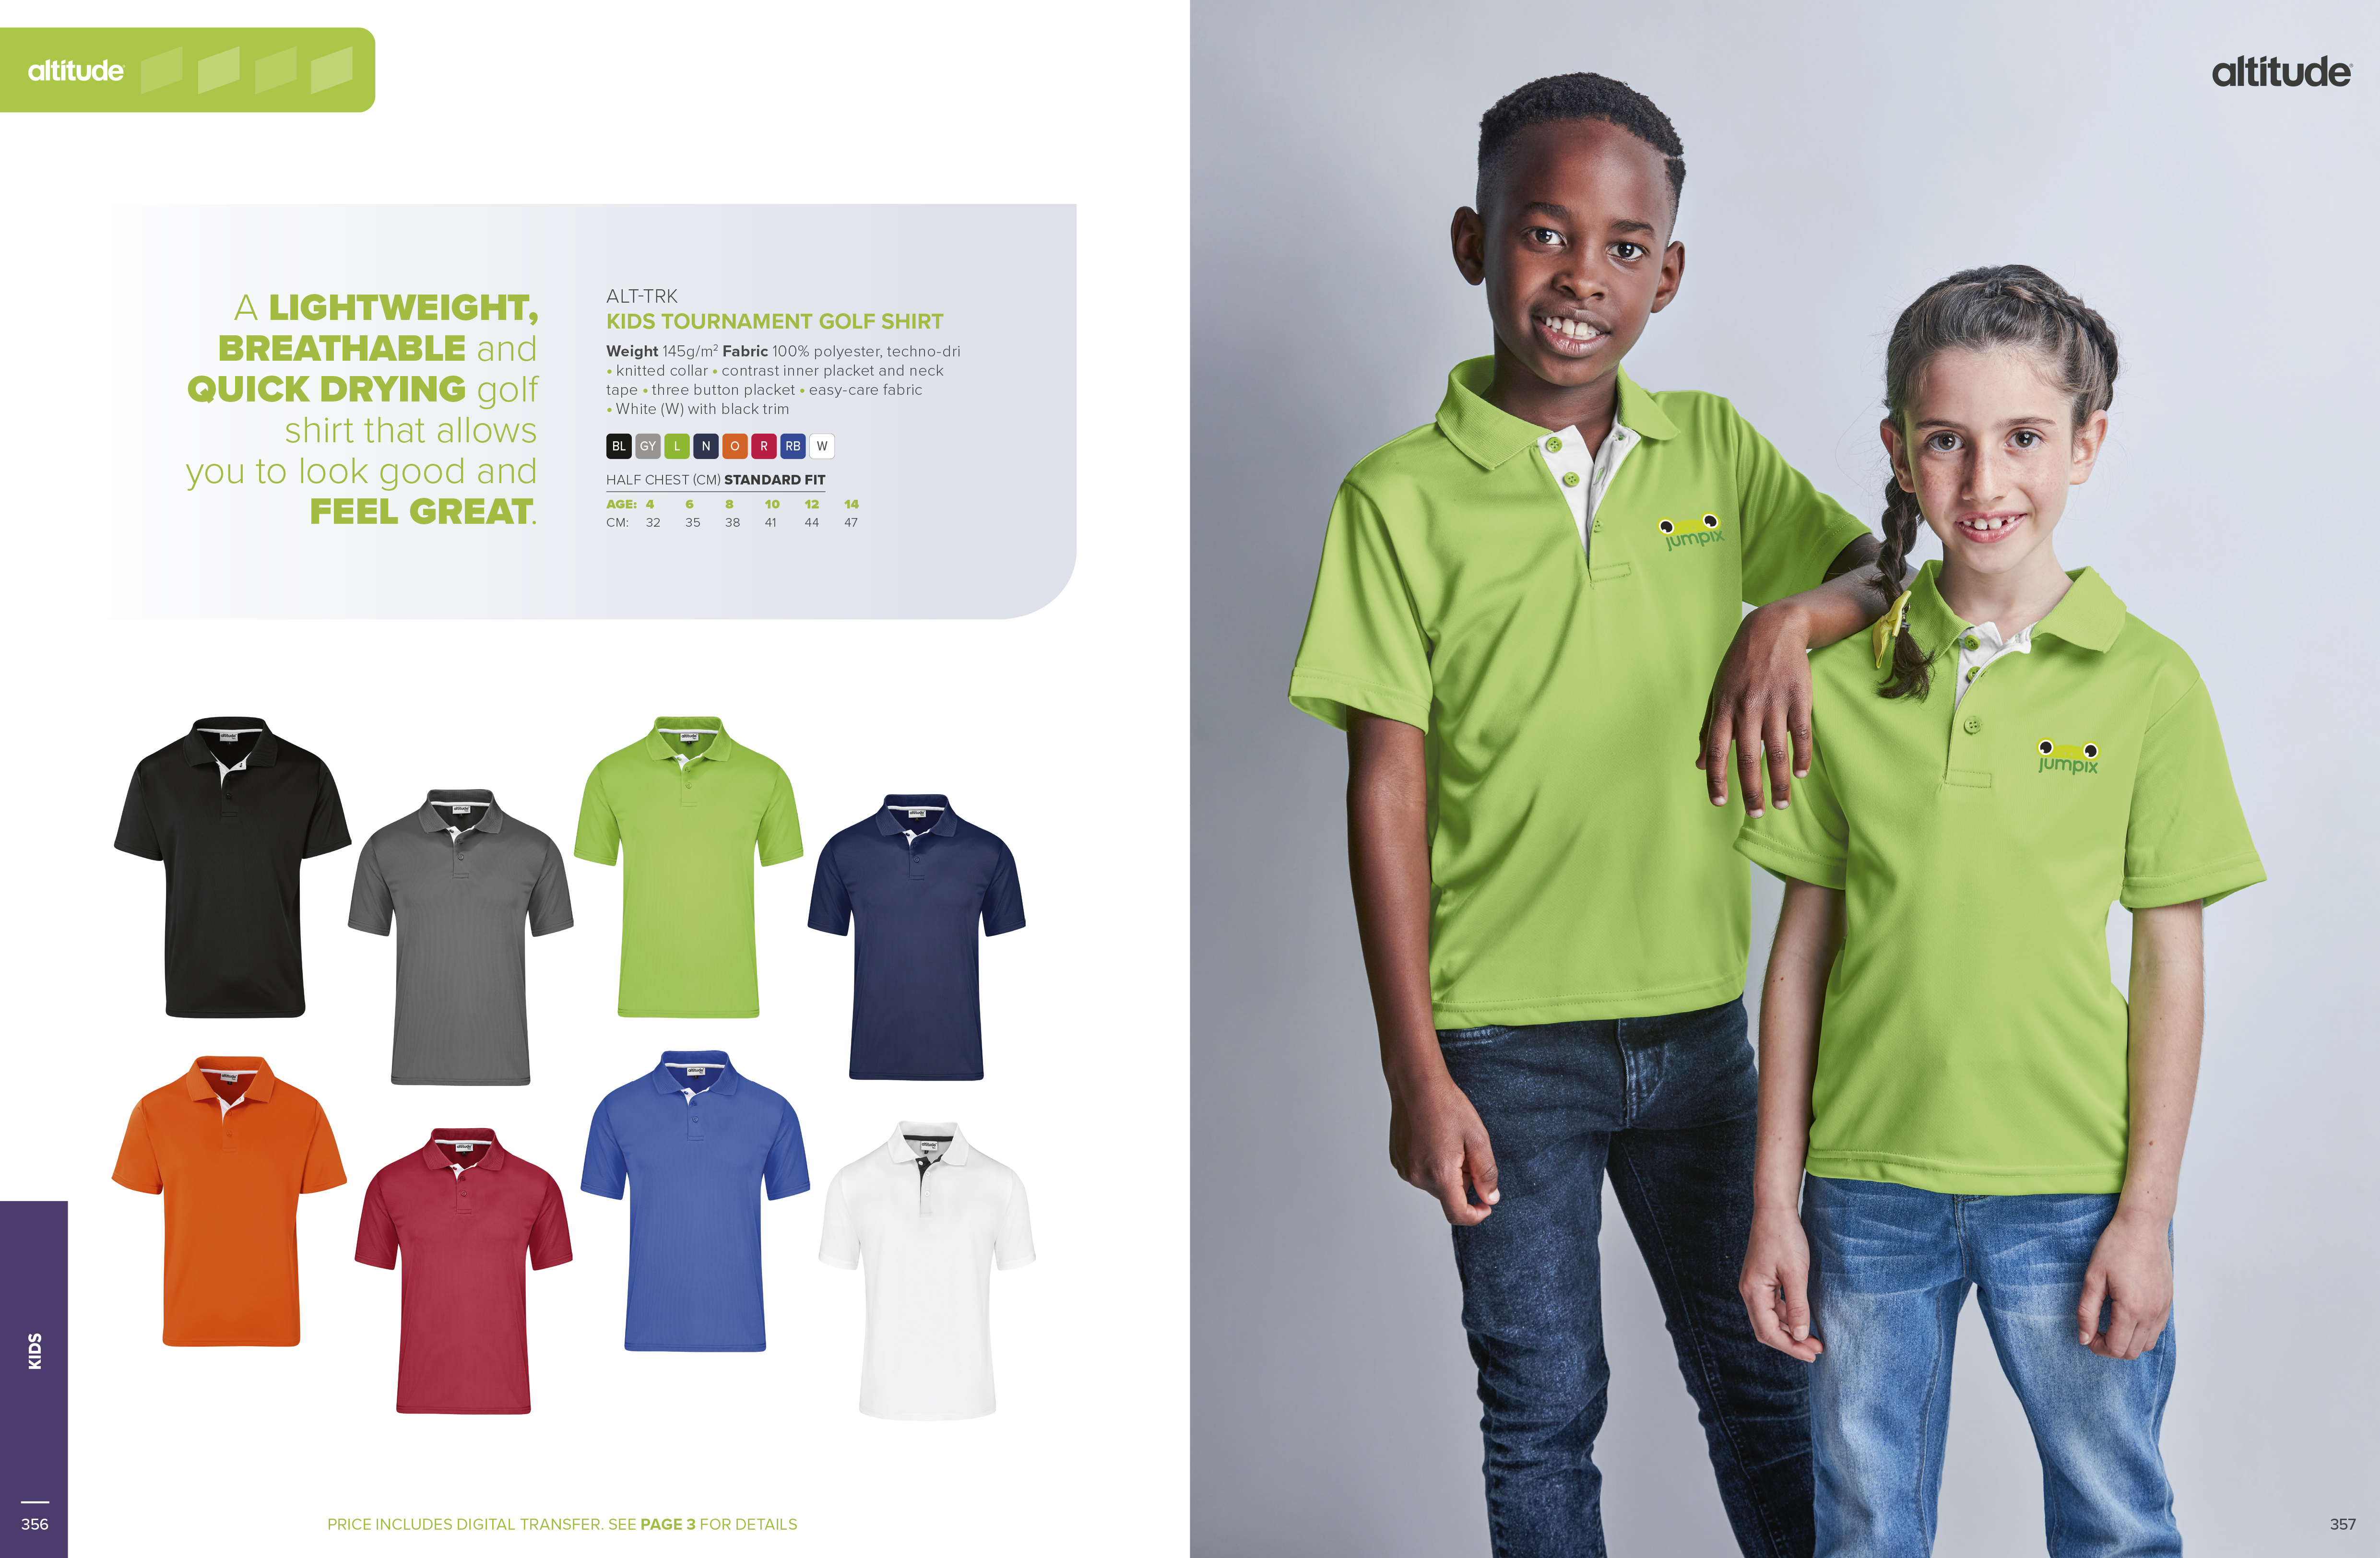 Kids Tournament Golf Shirt CATALOGUE_IMAGE